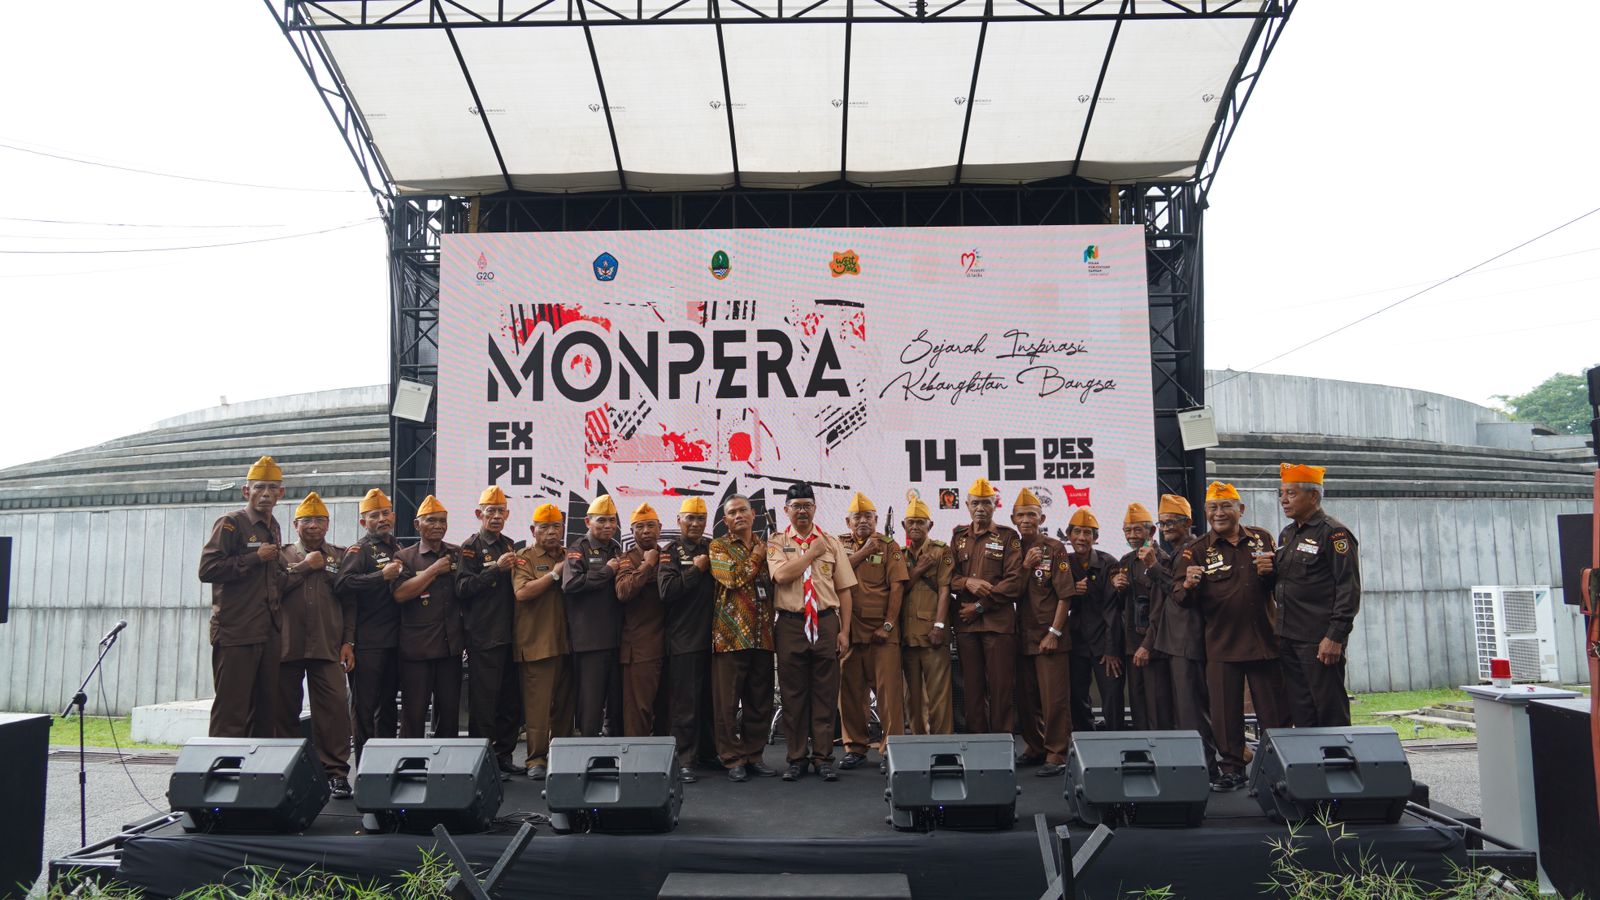 Disparbud Jabar Gelar Monpera Expo 2022 “Sejarah Inspirasi Kebangkitan Bangsa”